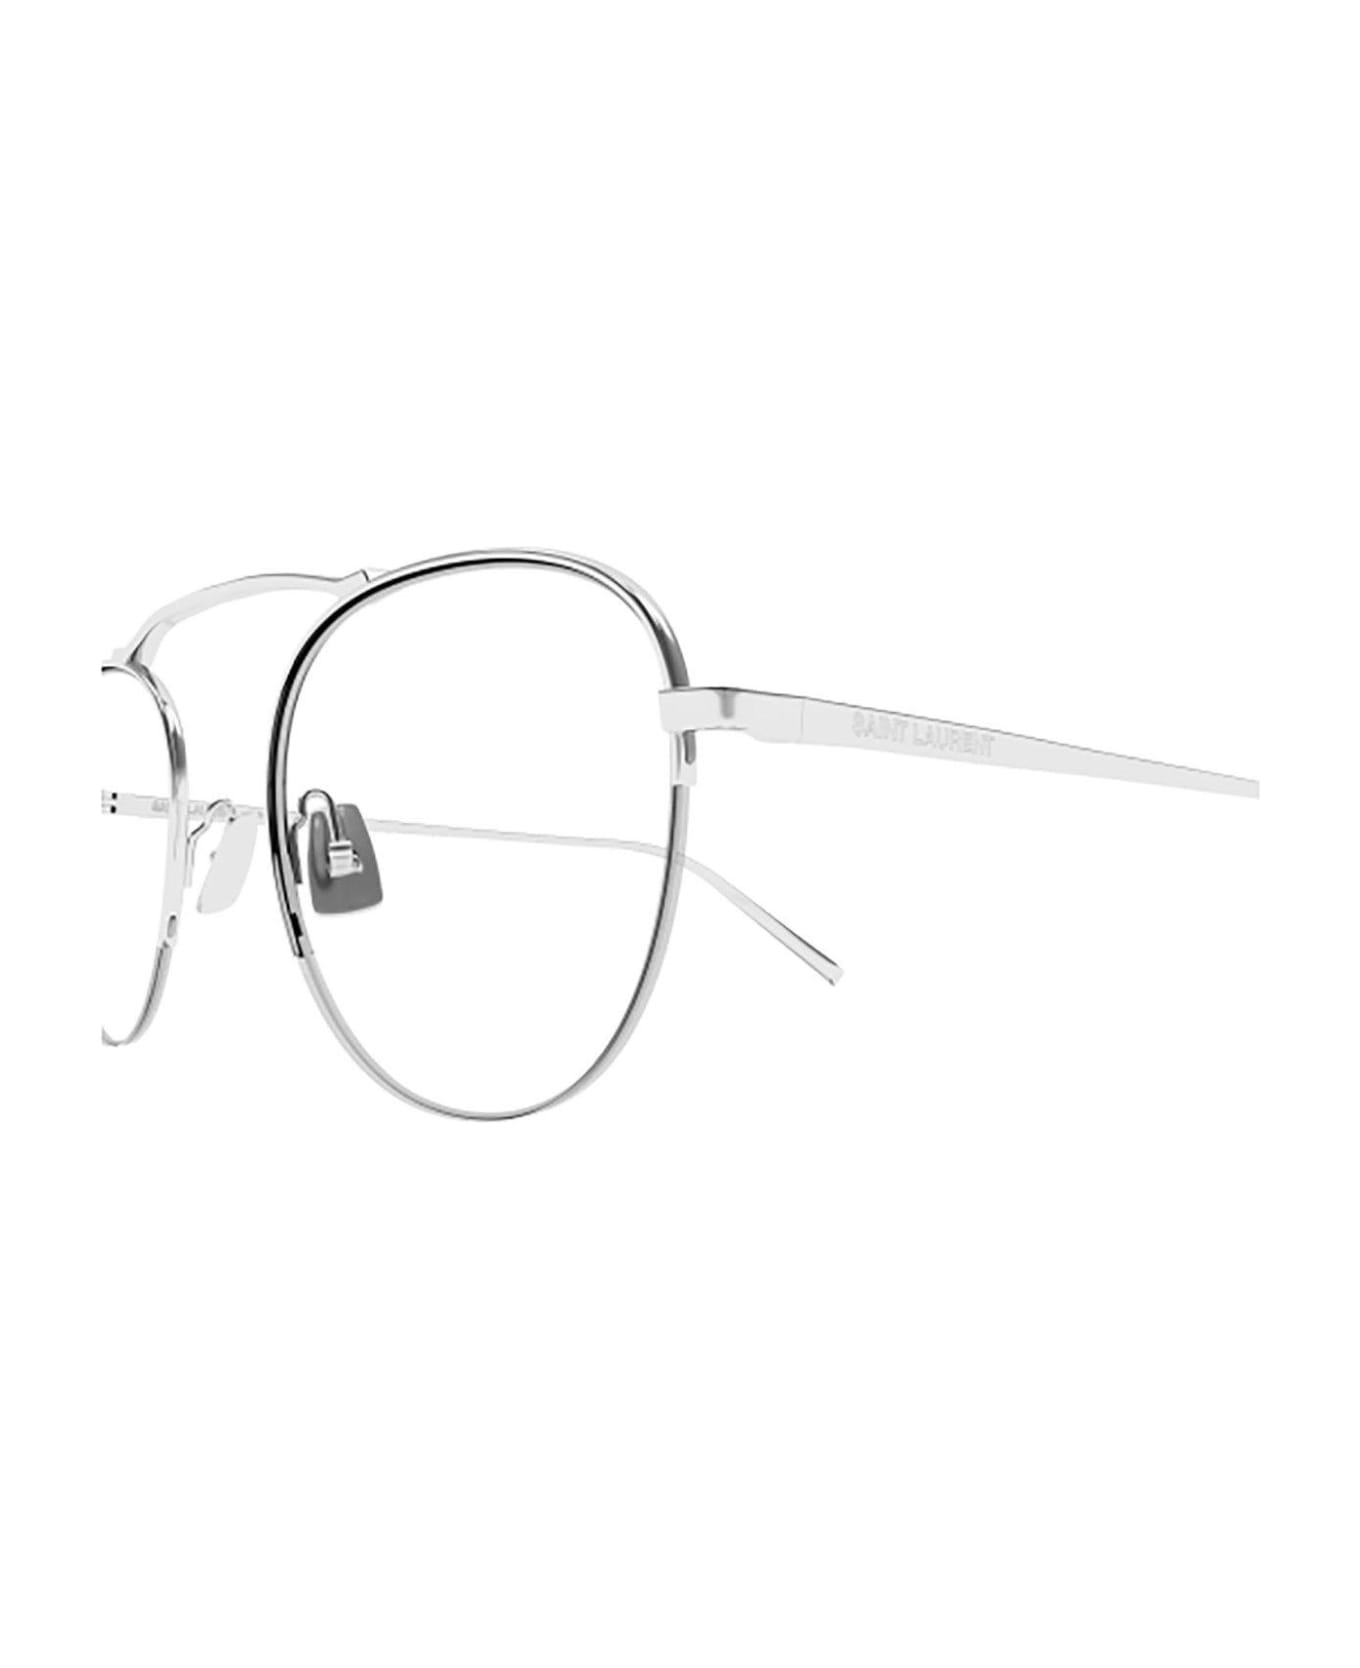 Saint Laurent Eyewear Round Frame Glasses - 001 silver silver transpa アイウェア